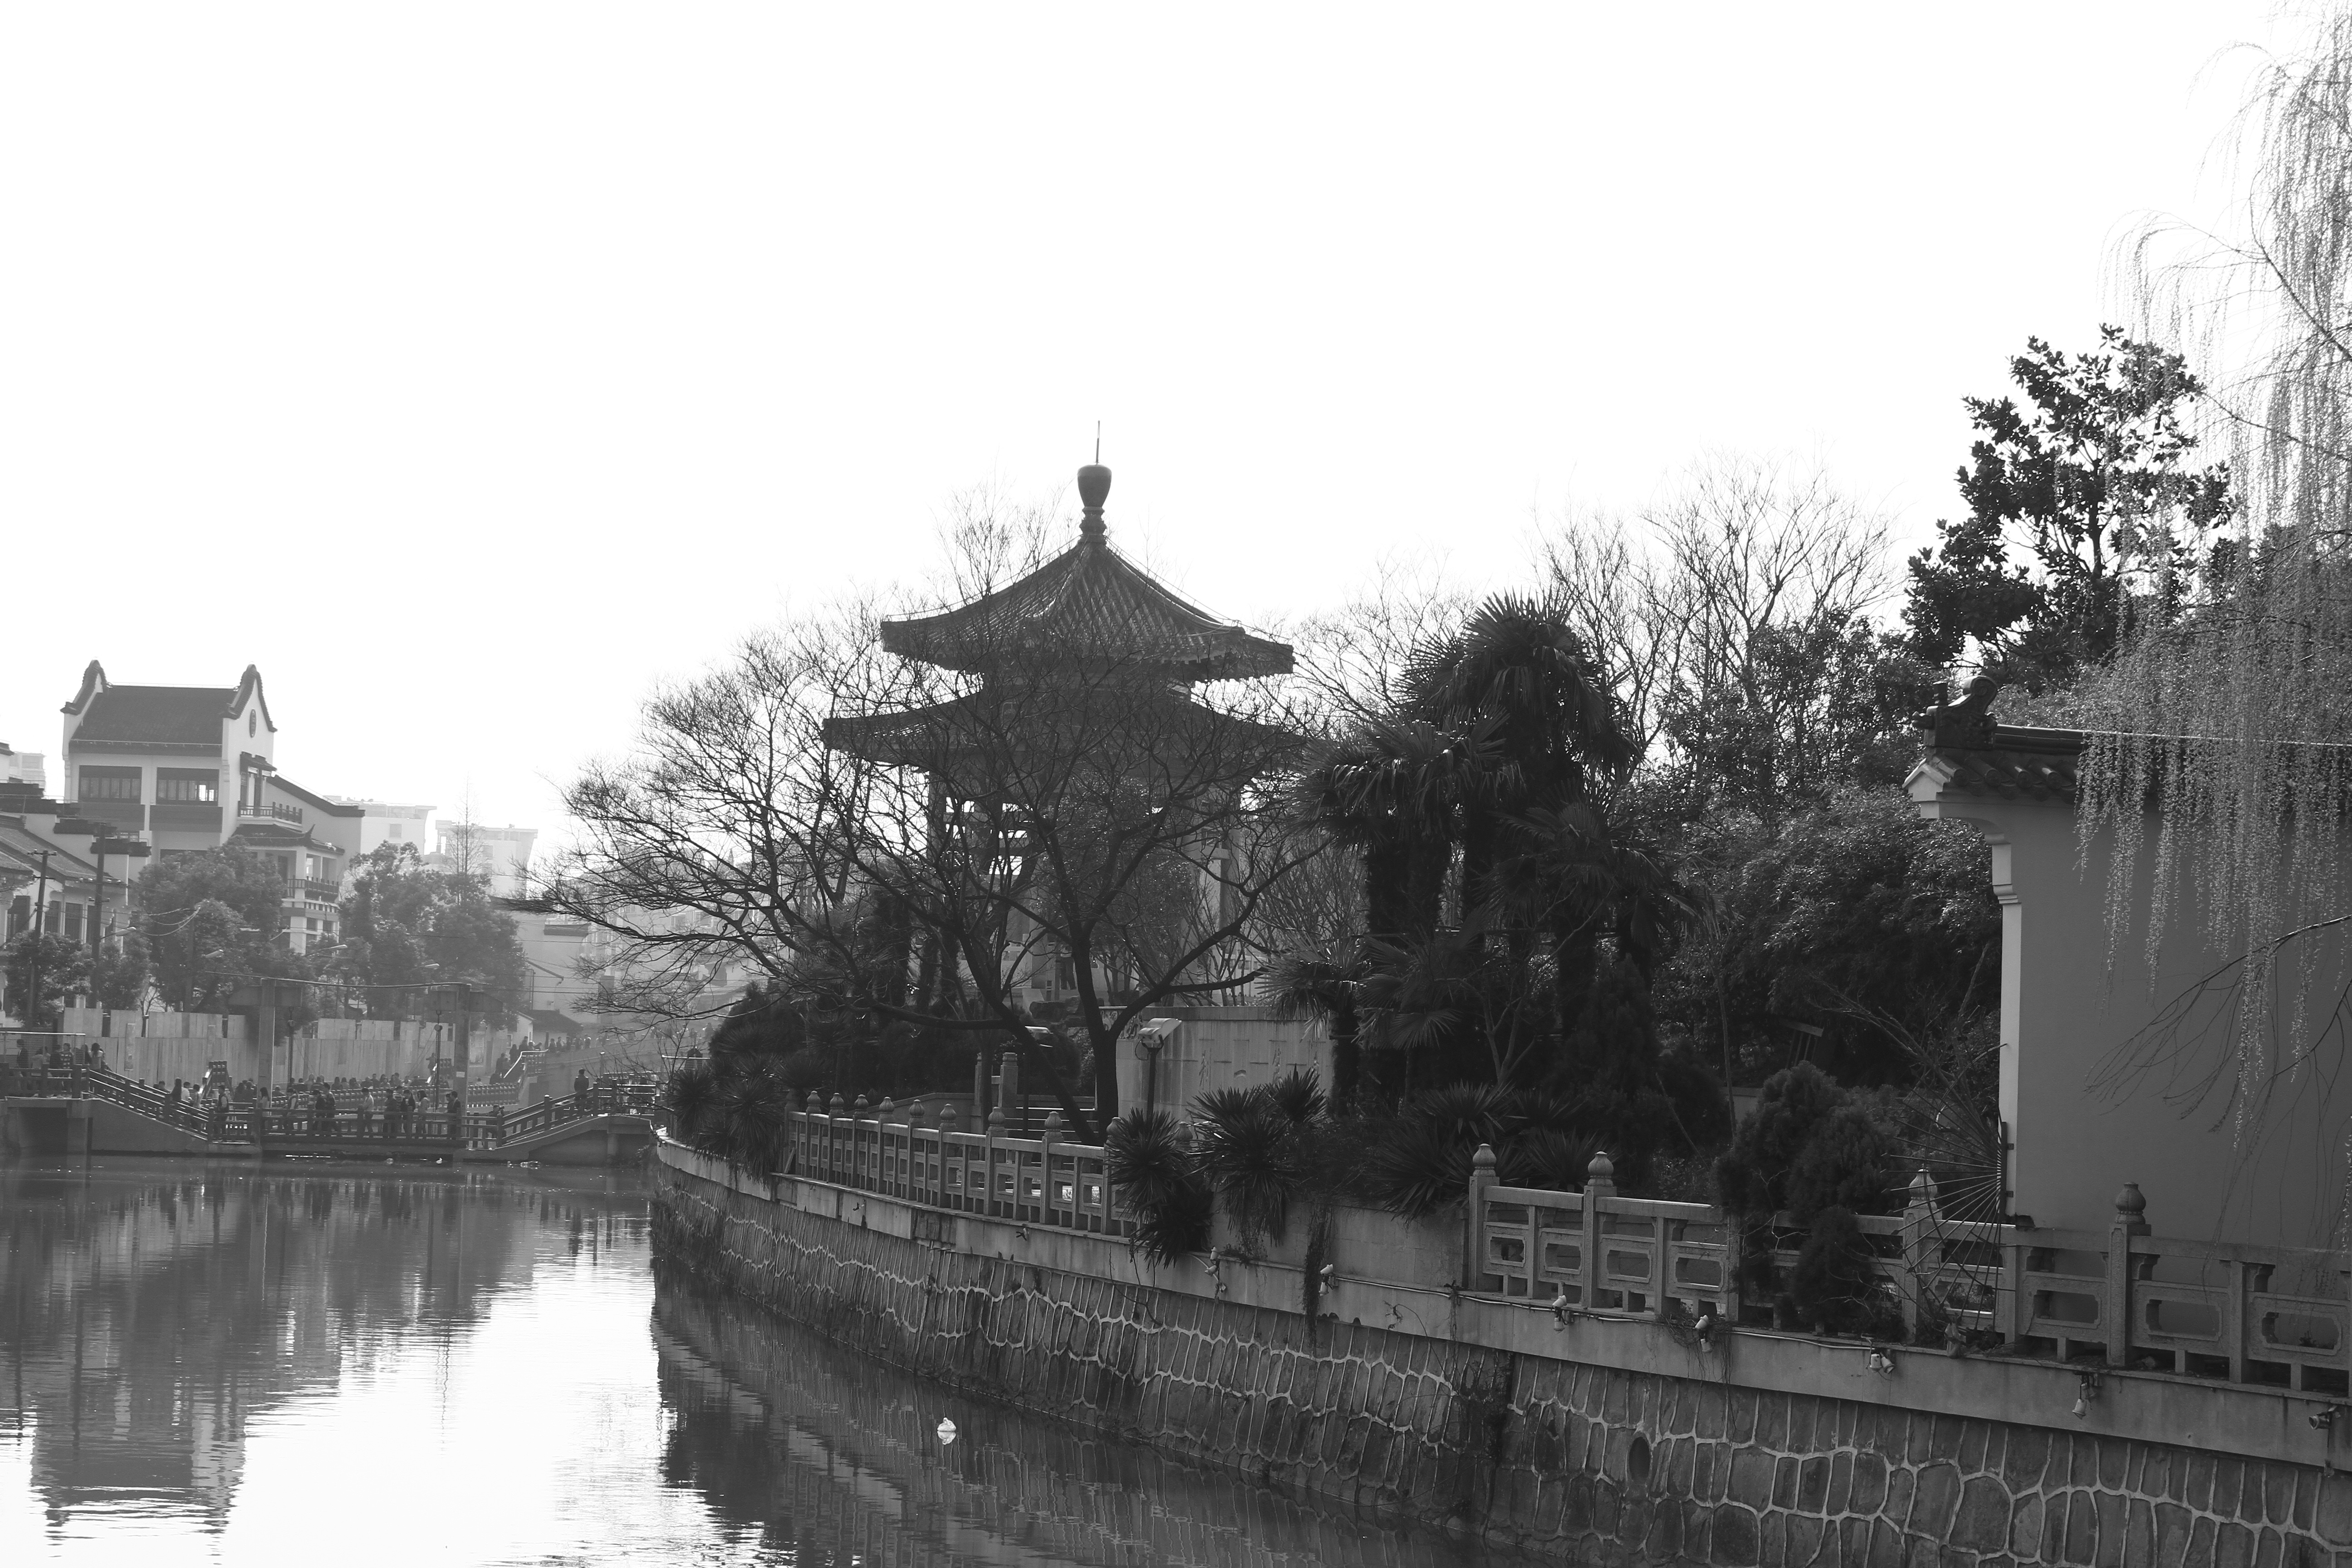 grayscale photo of pagoda beside body of water